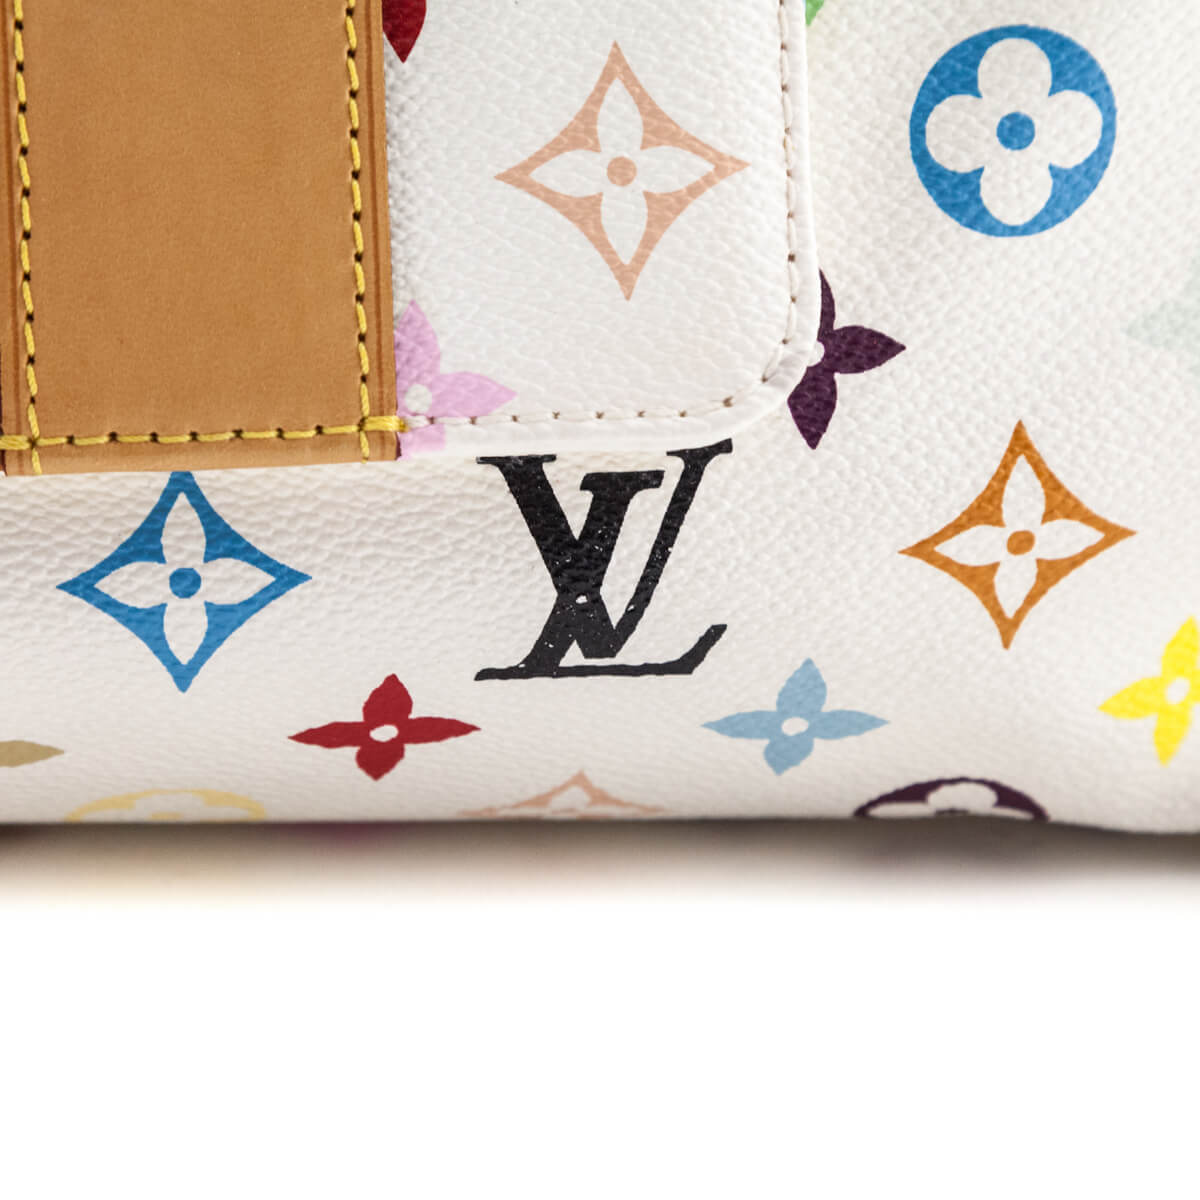 Vintage Louis Vuitton White Multicolor Speedy 30 Bag SP0094 042123 - $ –  KimmieBBags LLC